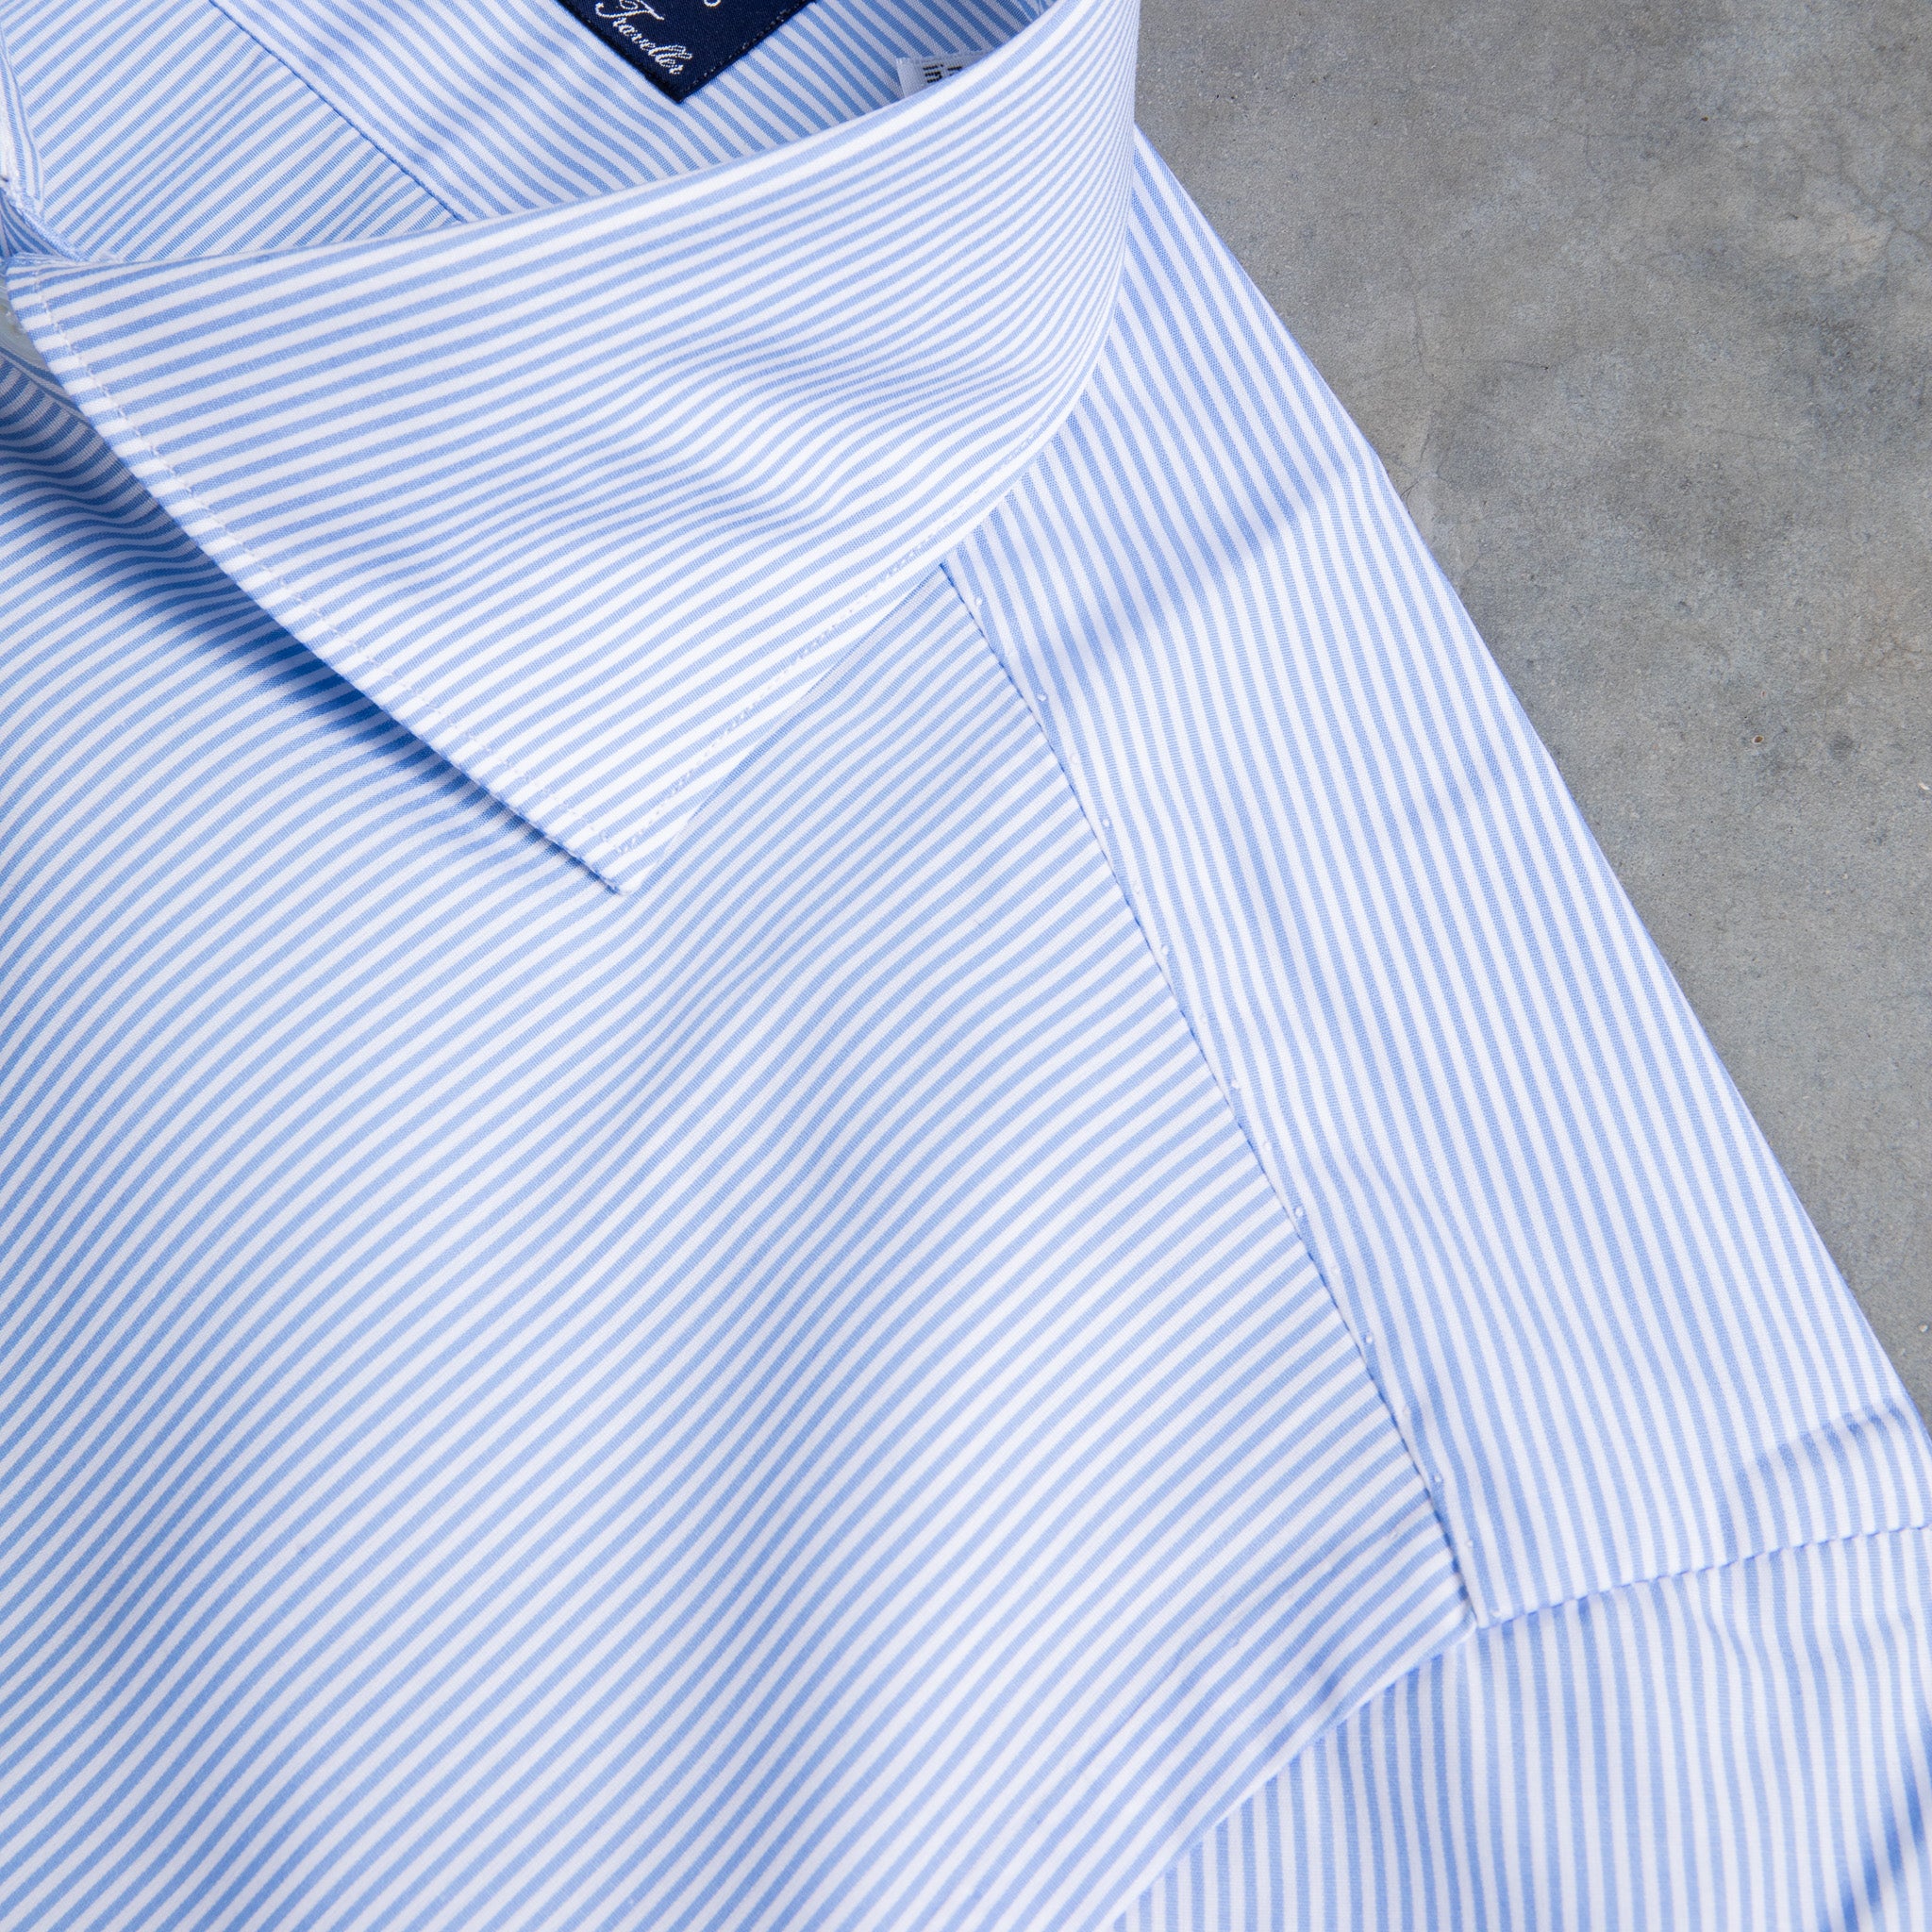 Finamore &quot;Traveller&quot; shirt Milano fit collar eduardo light blue stripe